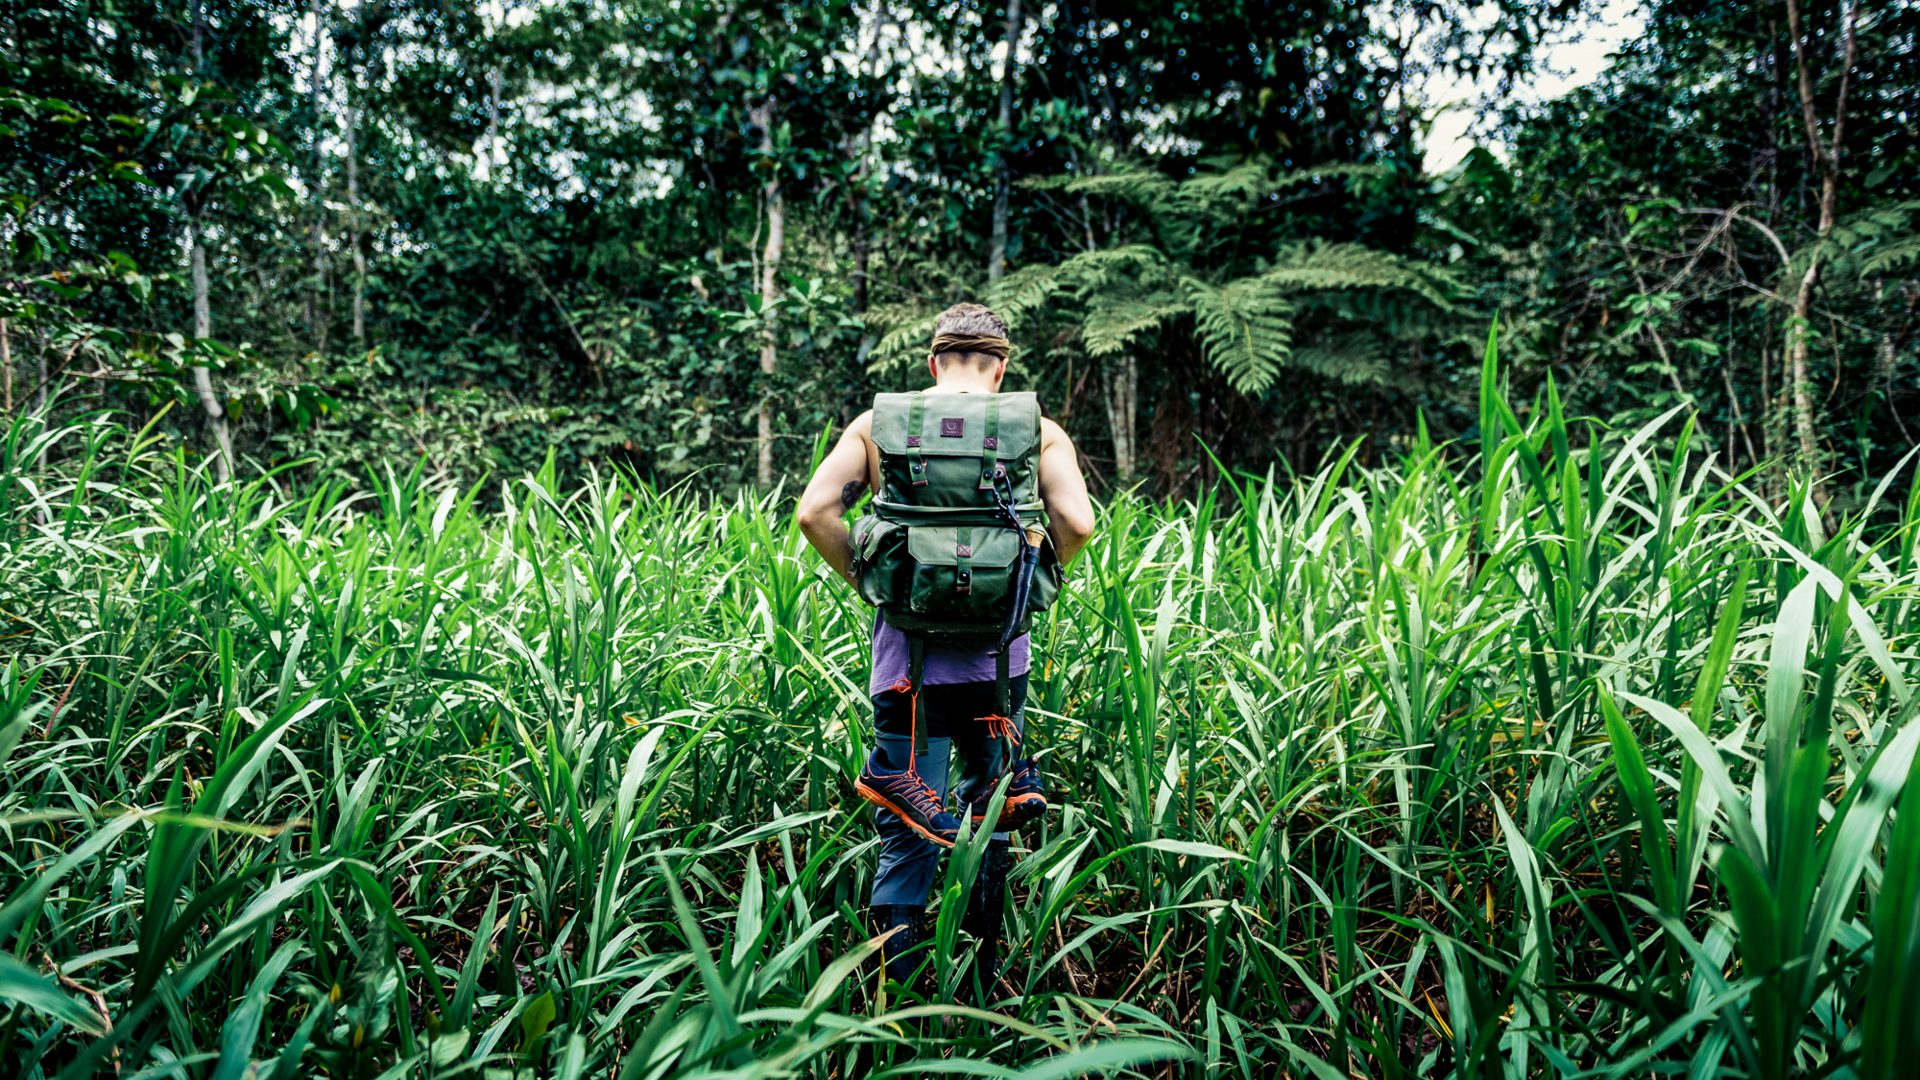 Can Daniel Radcliffe's 'Jungle' film help Bolivian ecotourism ...